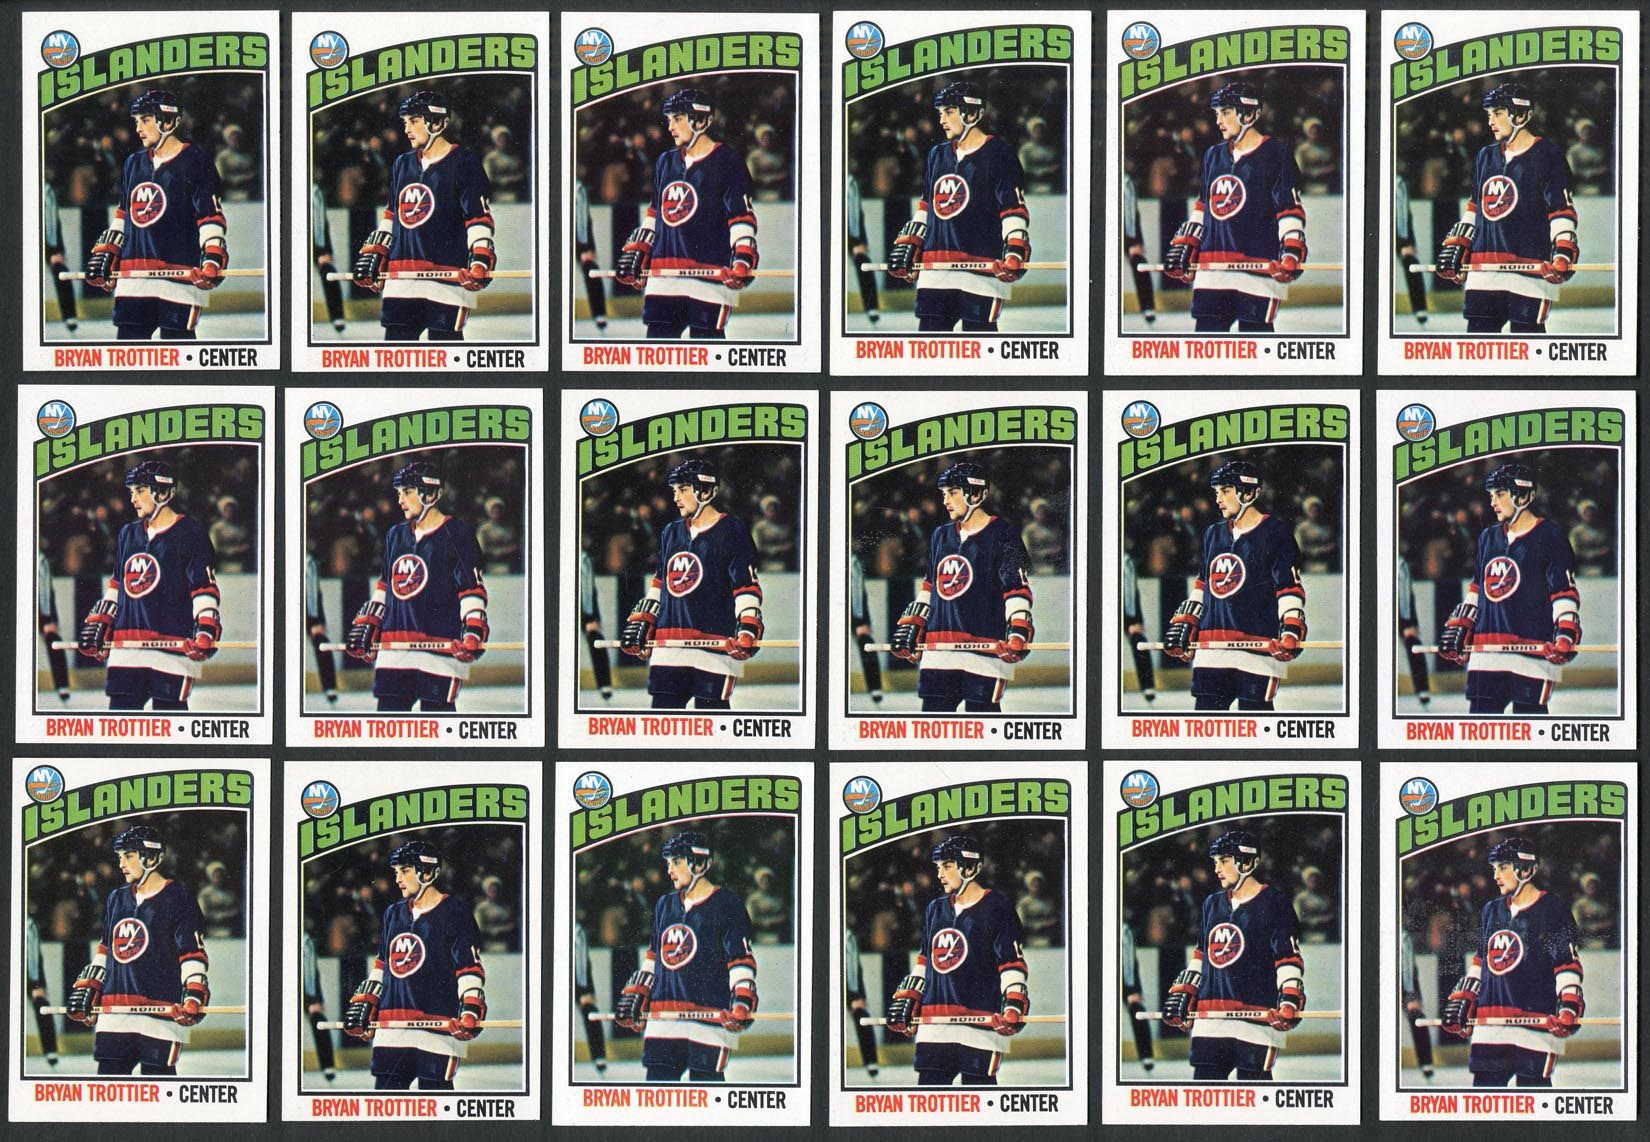 Hockey Cards - 1976-77 Topps Hockey High Grade Cards from Vending (45,000+ cards)